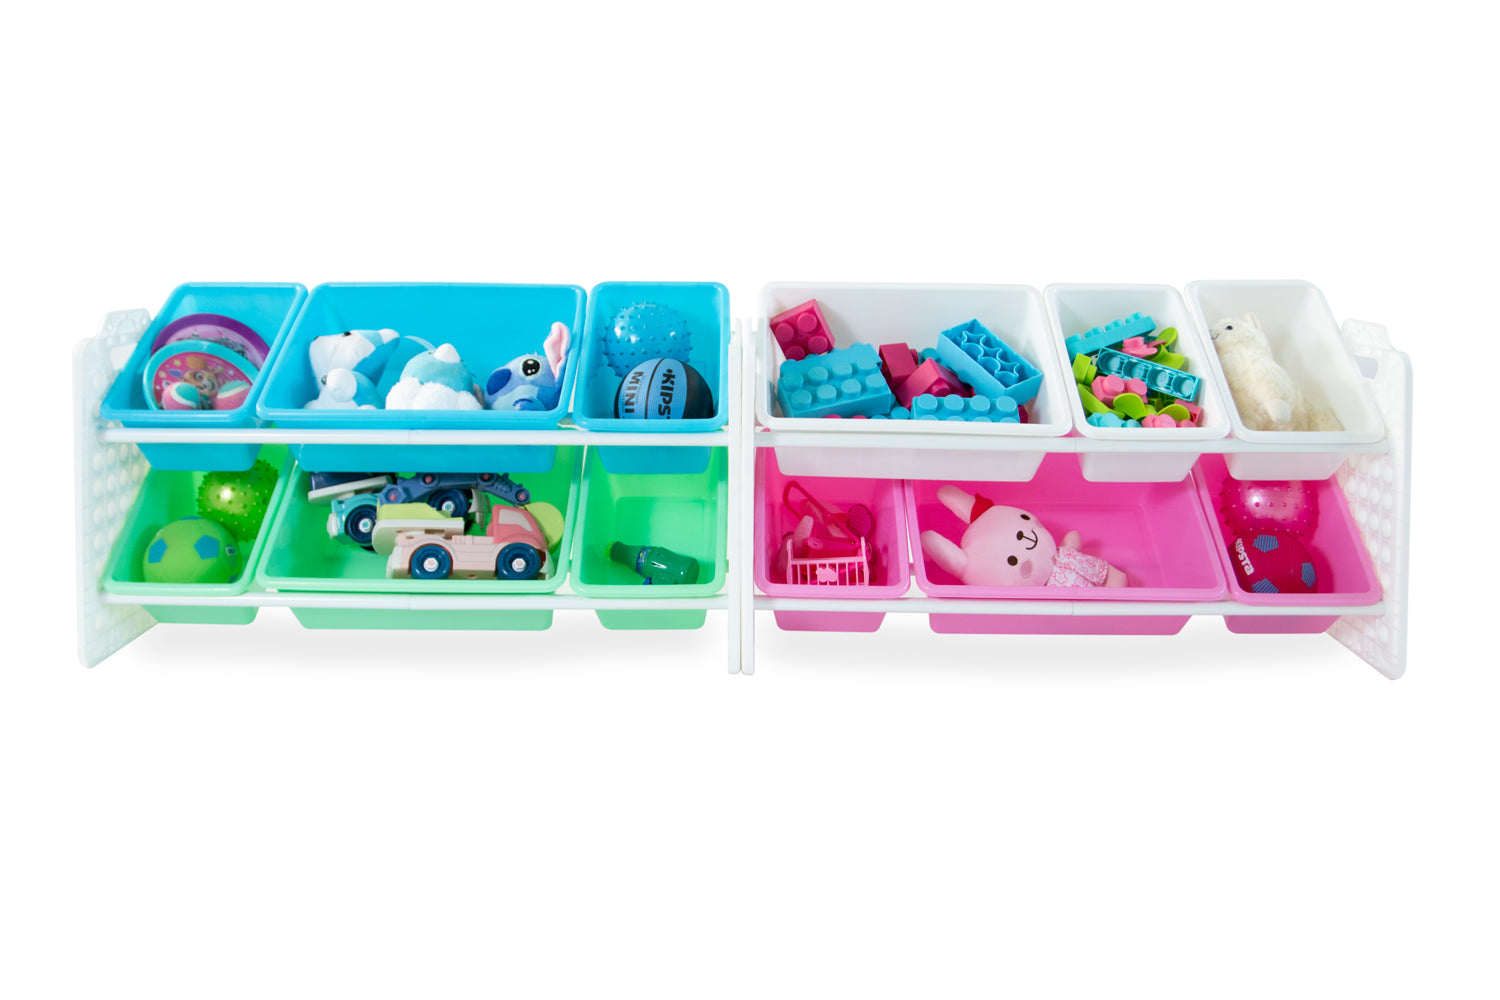 UNiPLAY 12 Bins Toy Storage Organizer - Pink (UB45631)